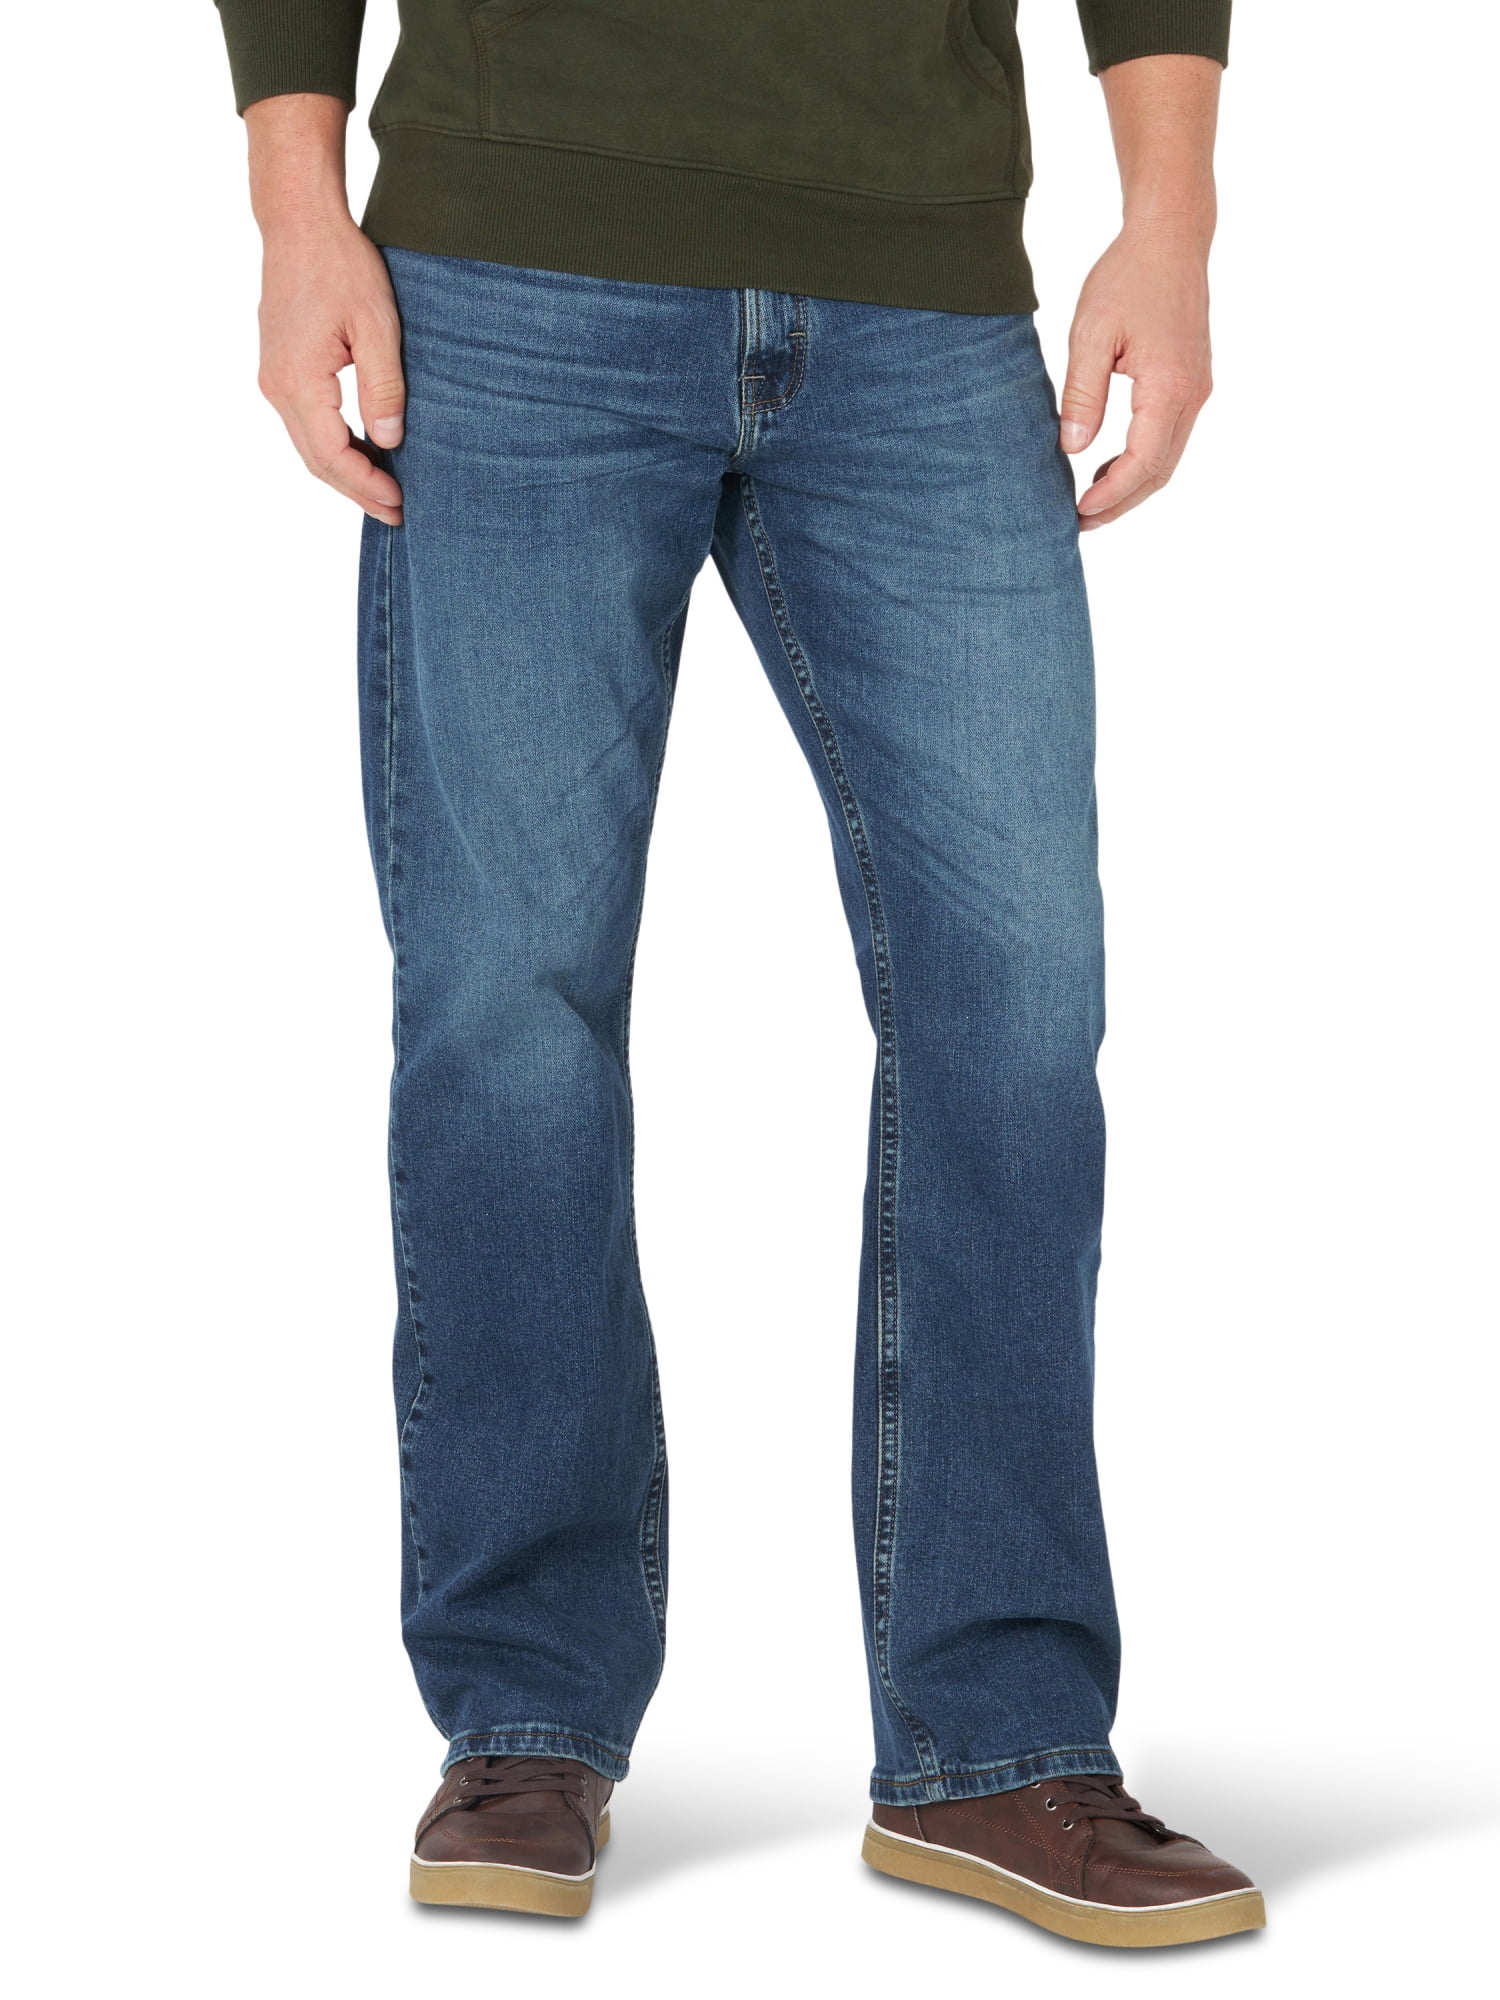 Wrangler Men's Retro Slim Fit Boot Cut Jean, Worn in, 34W x 32L